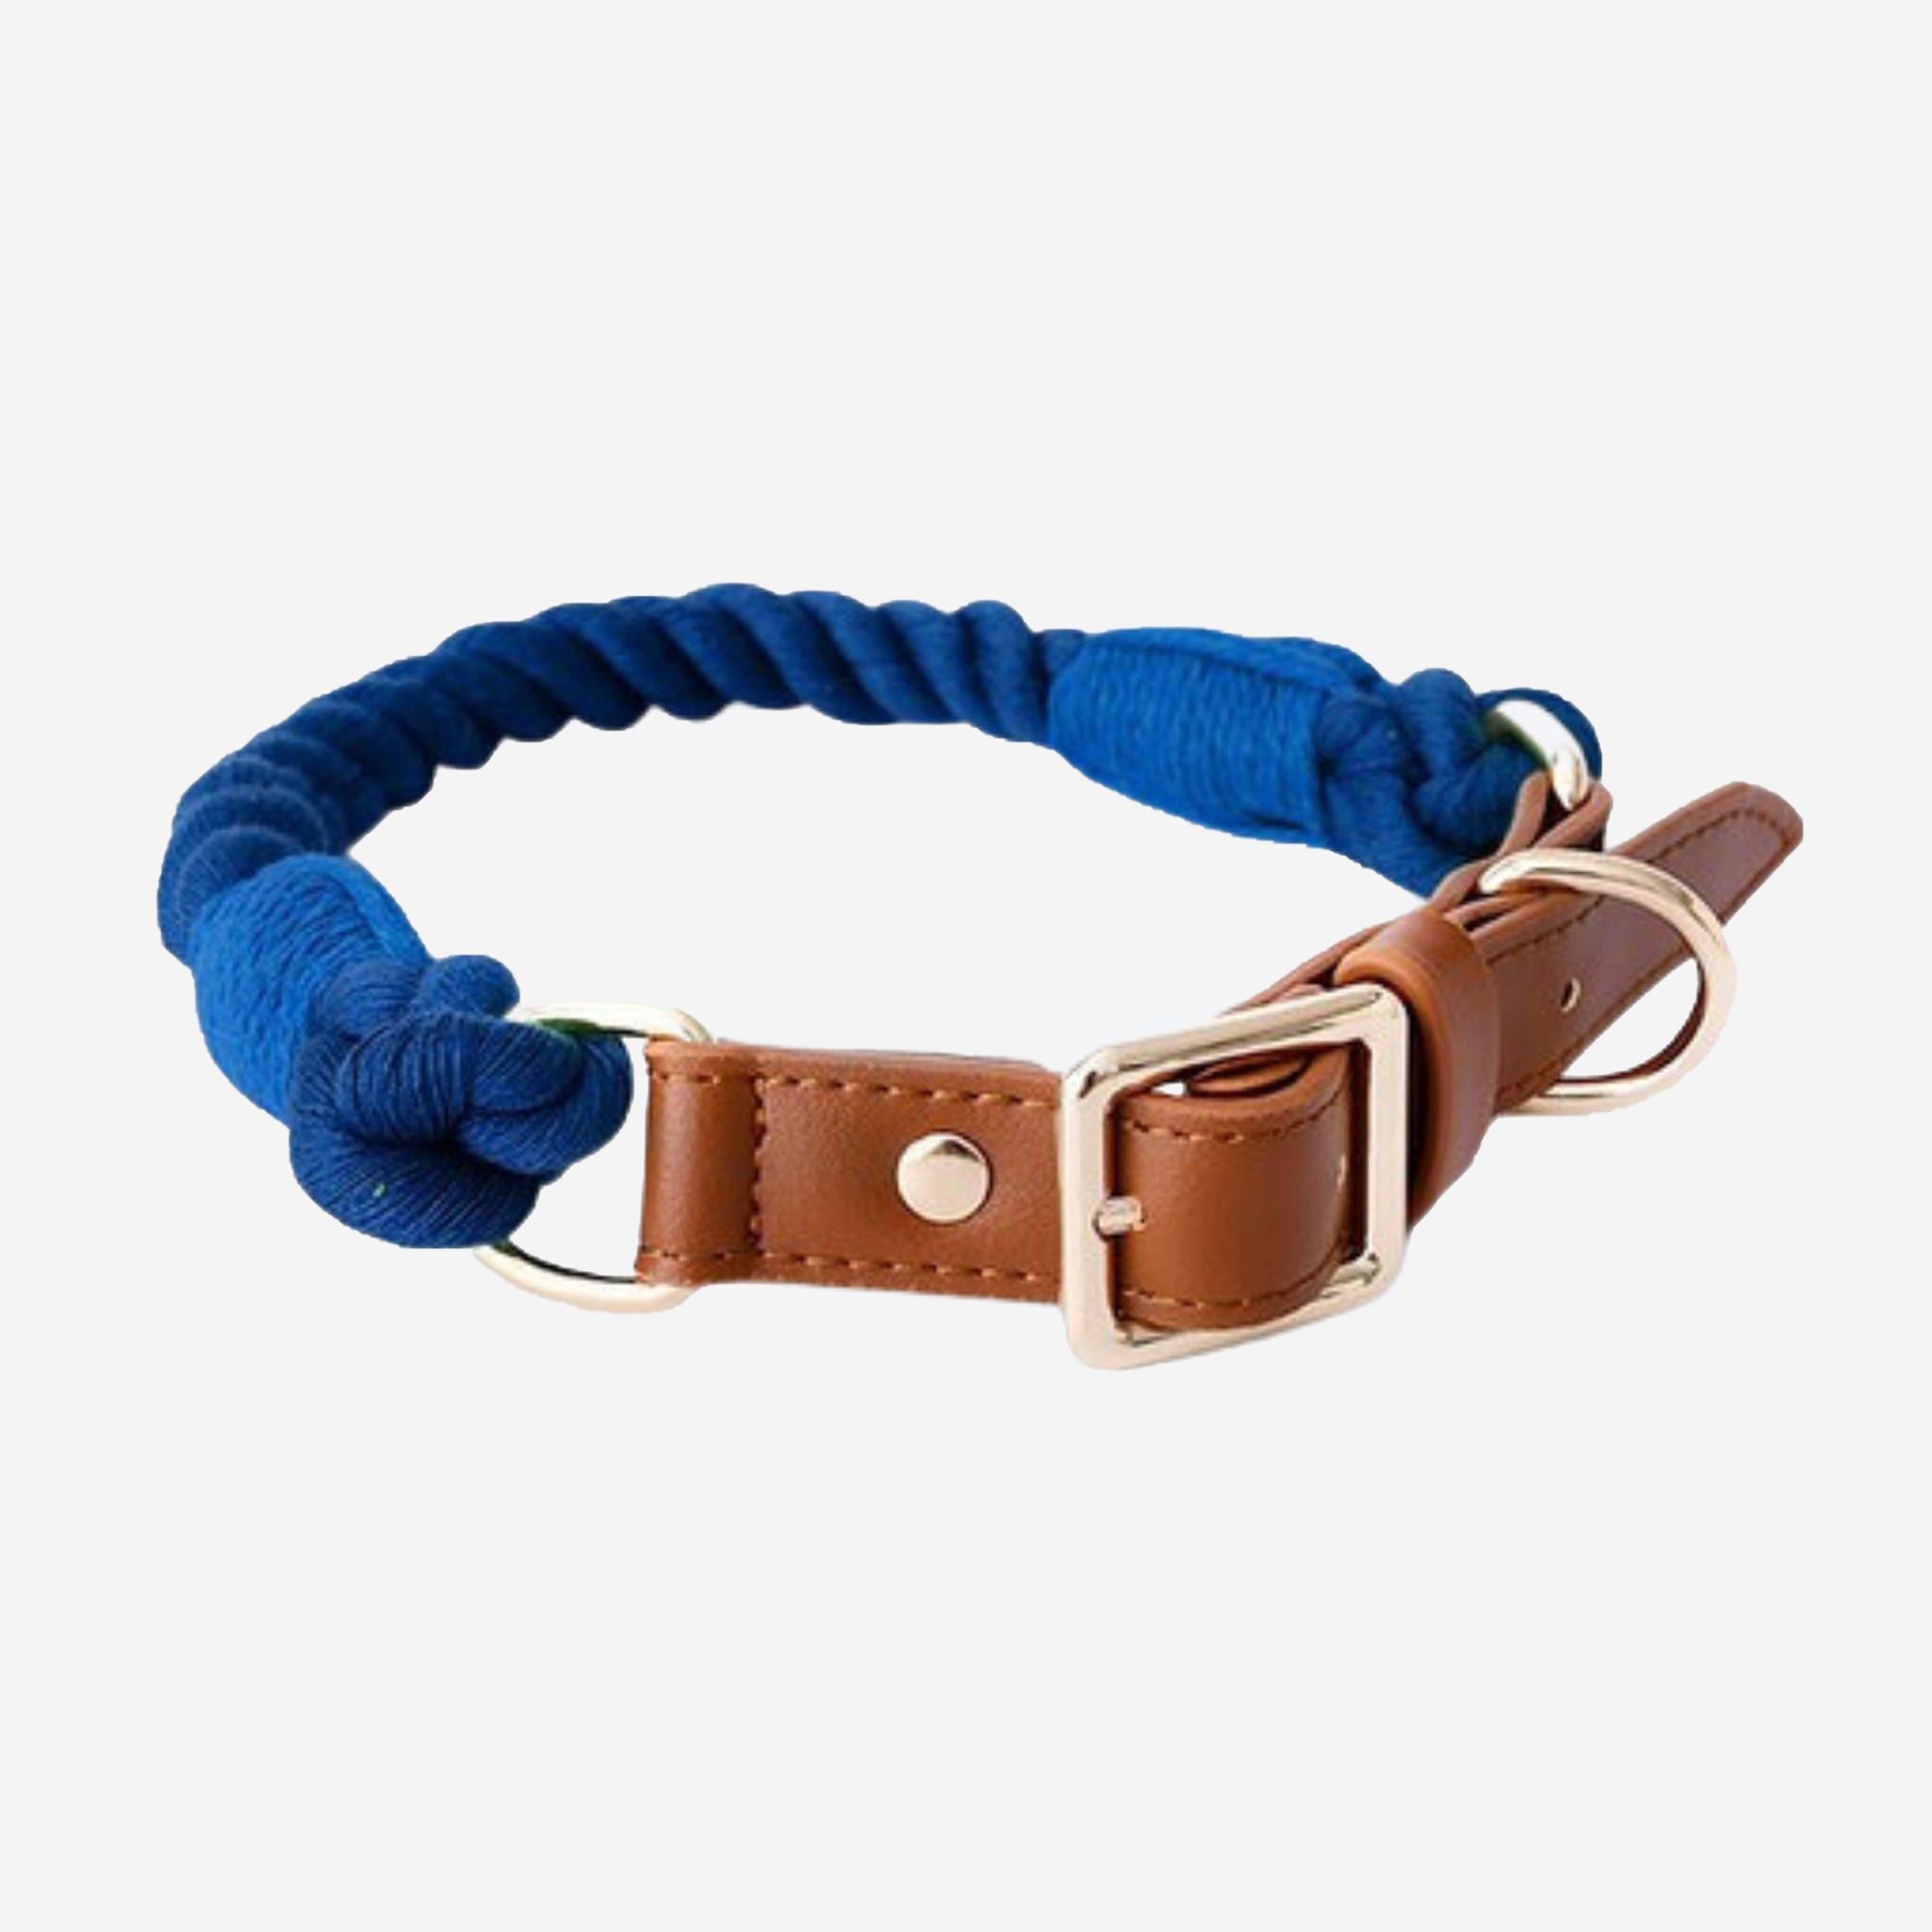 Pupwonders | Boston Leather & Braided Cotton Pet Collars